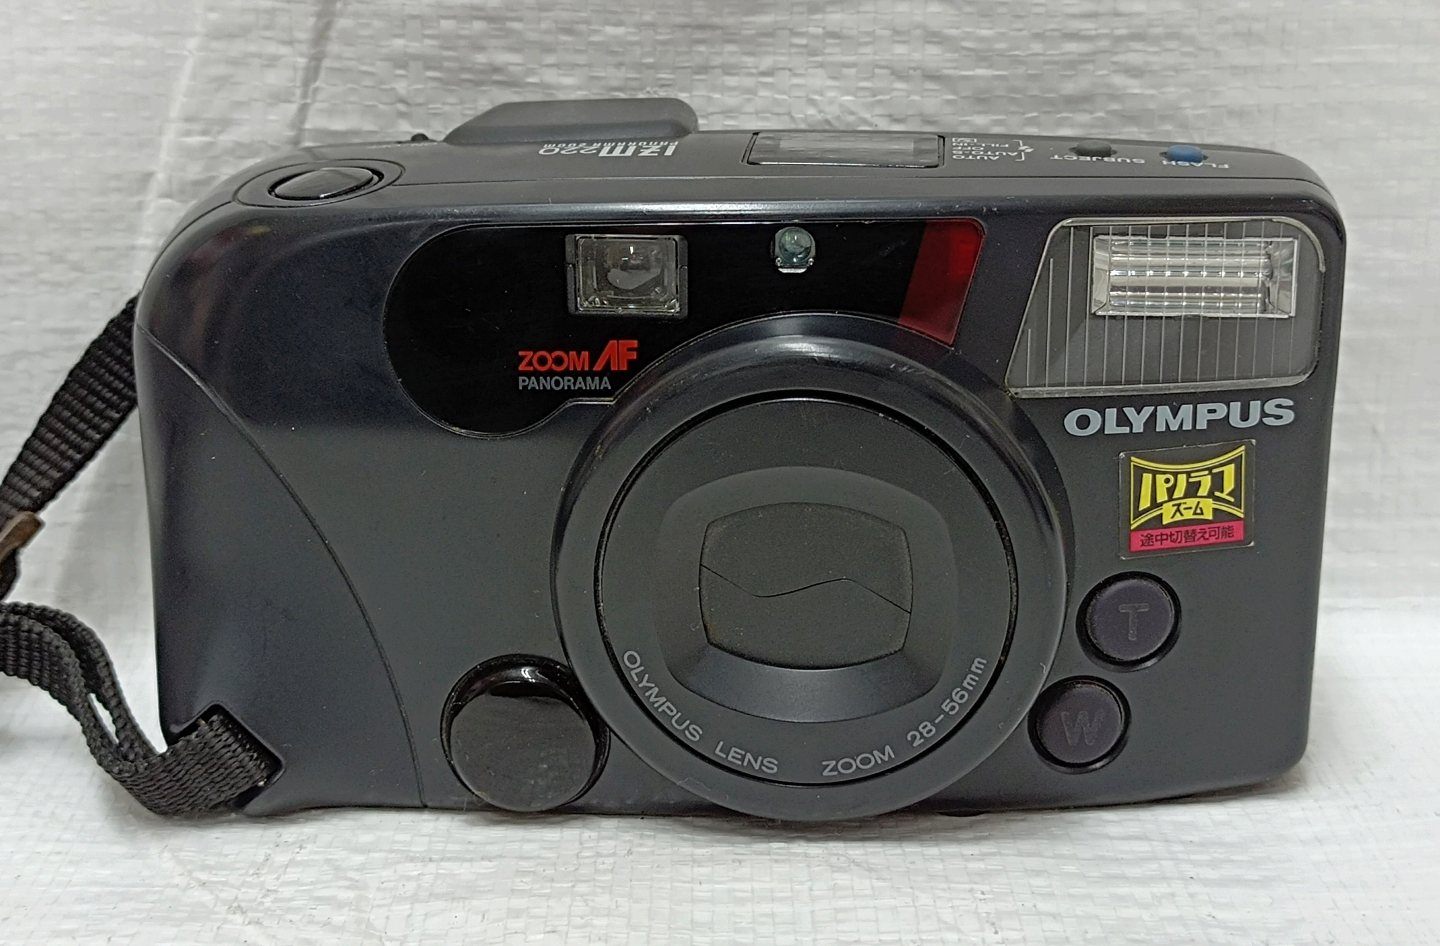 OLYMPUS пленочный фотоаппарат IZM220 panorama zoom рабочий товар 